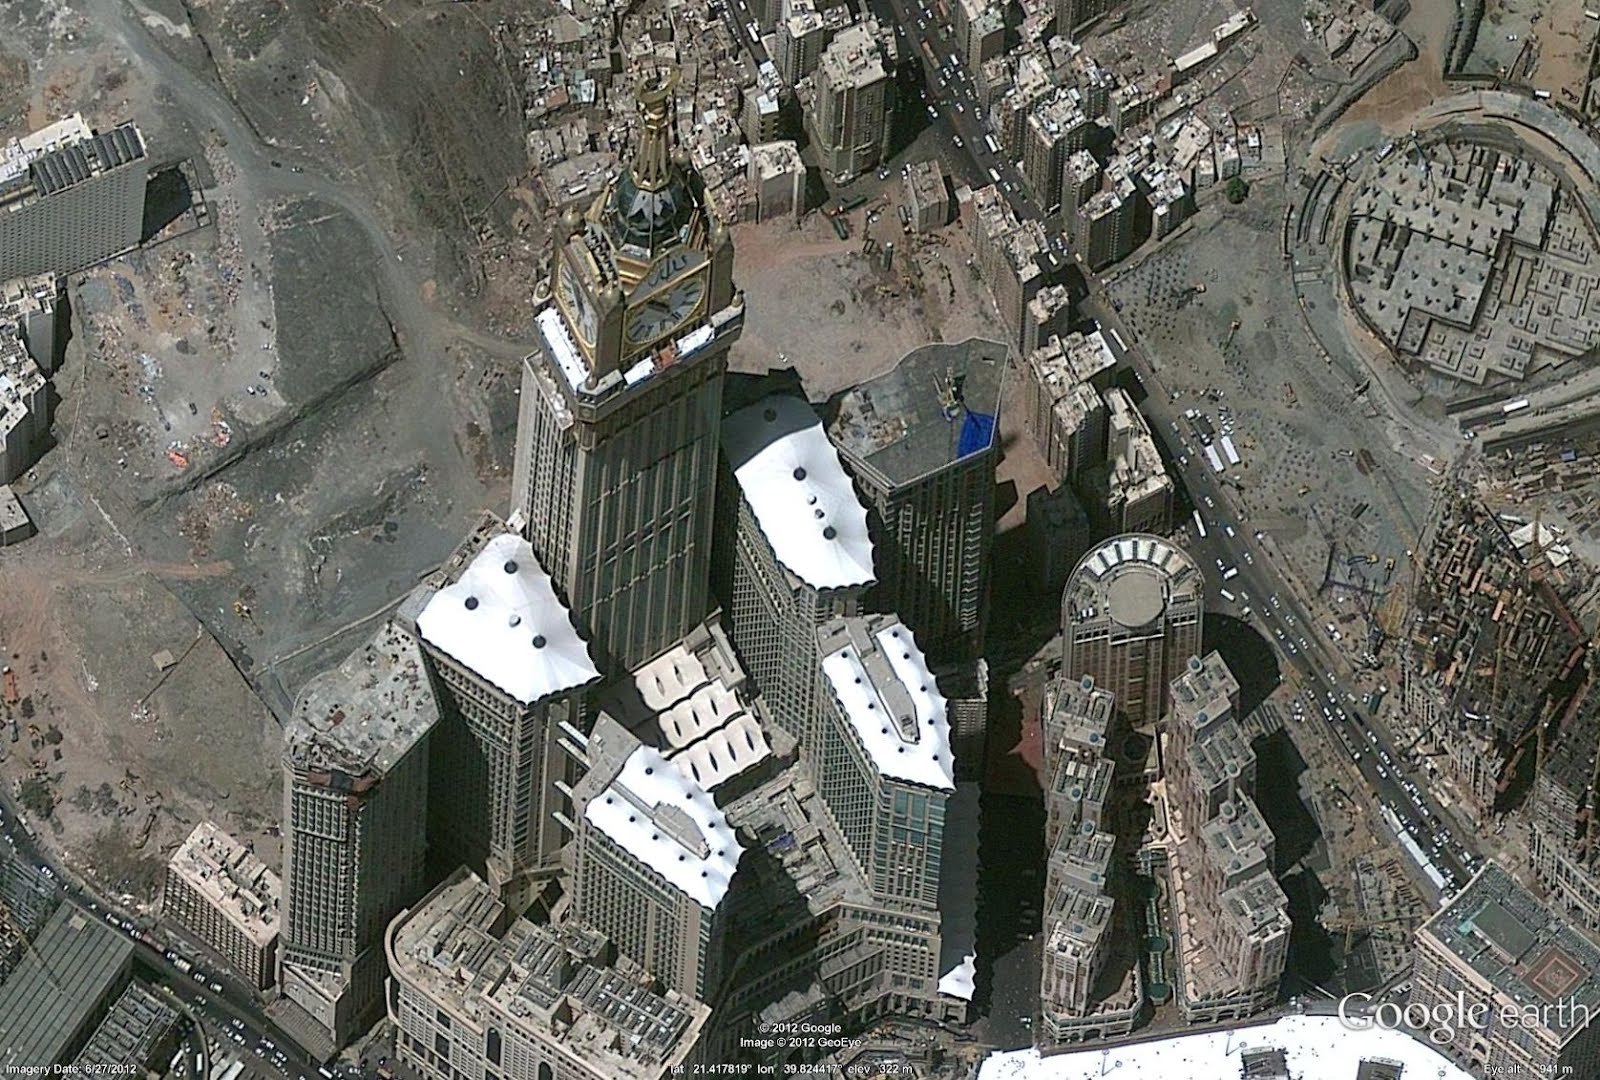 Видеть в реальном времени. Абрадж Аль-Бейт. Абрадж Аль-Бейт Мекка. Мекка Google Earth. Мекка со спутника.